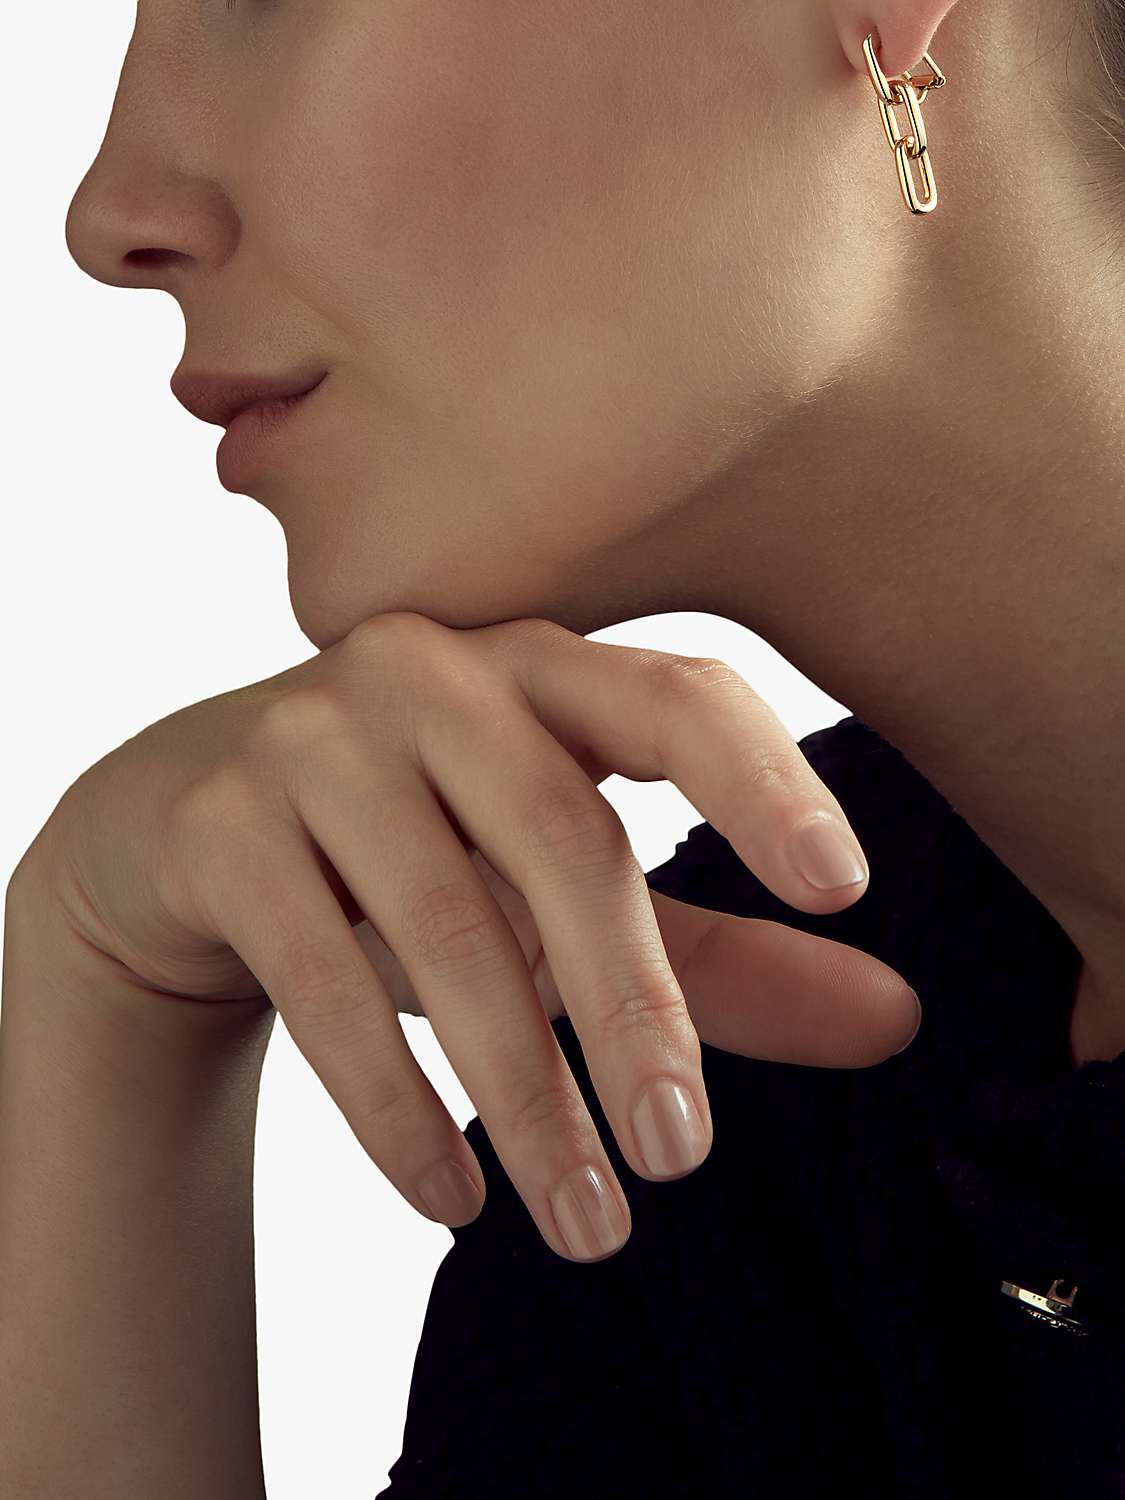 Buy Emma Holland Link Drop Clip-On Earrings, Gold Online at johnlewis.com